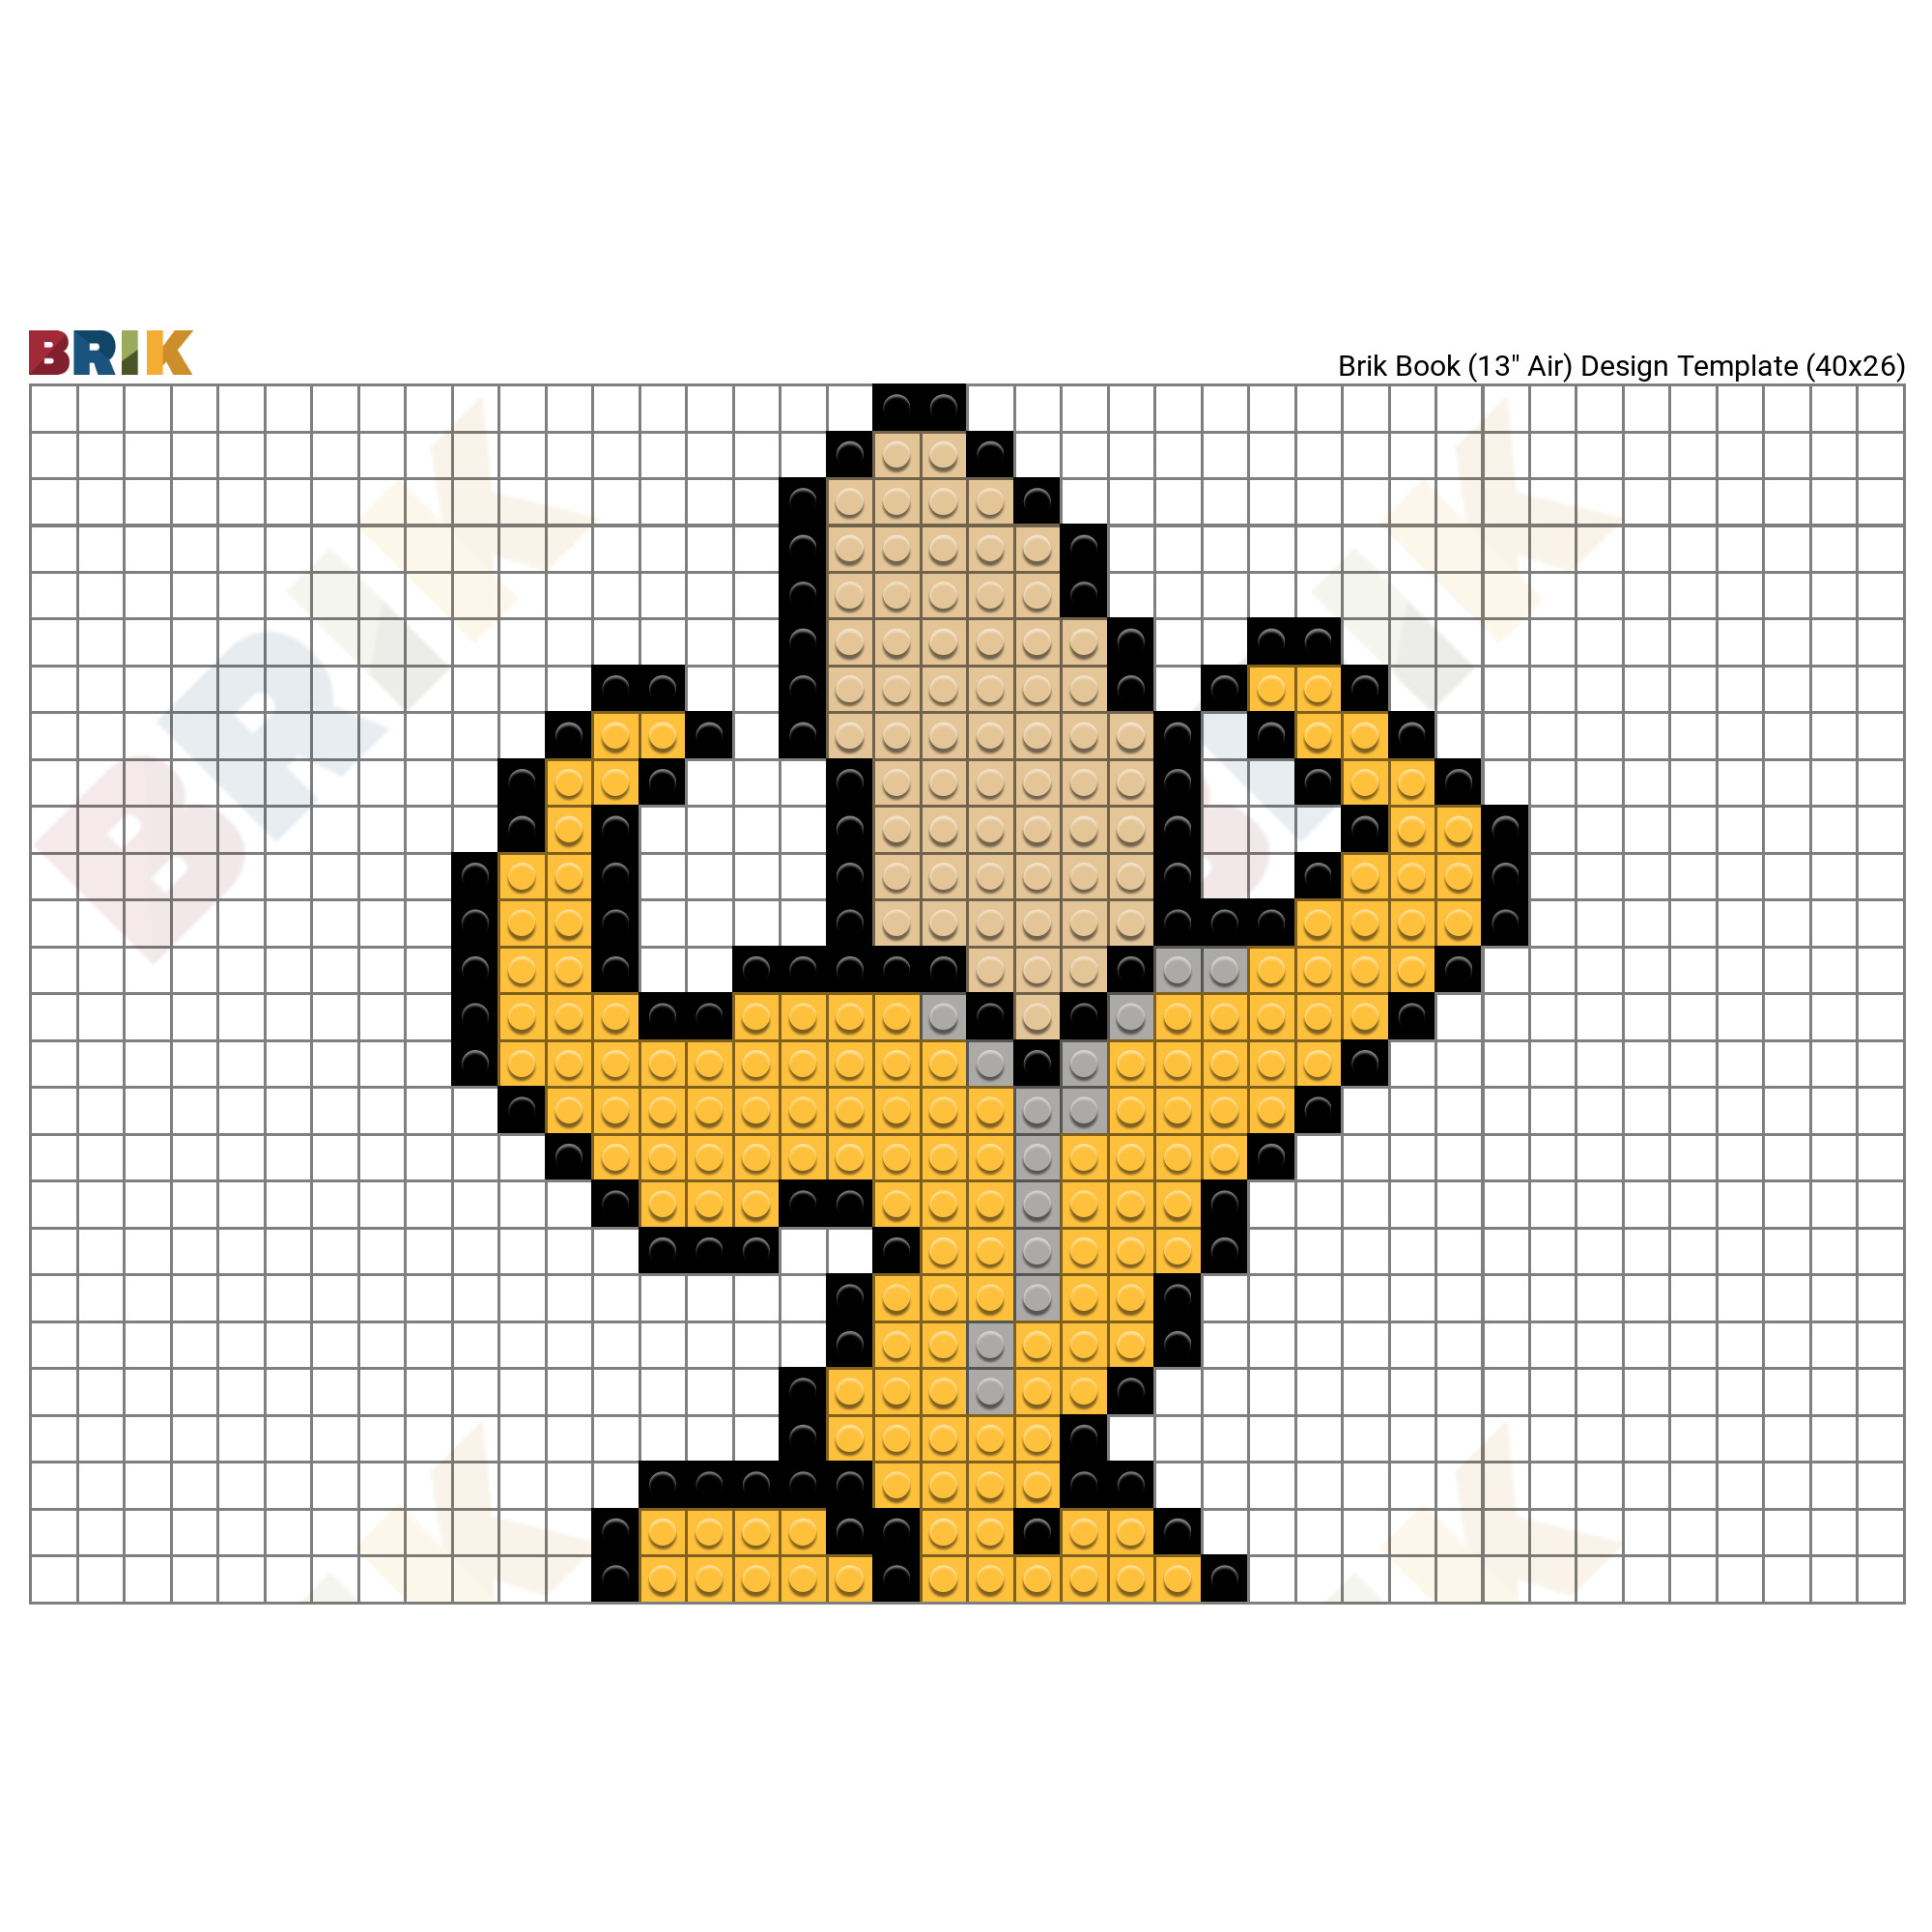 Do a nice pixel art by Bananenboylol